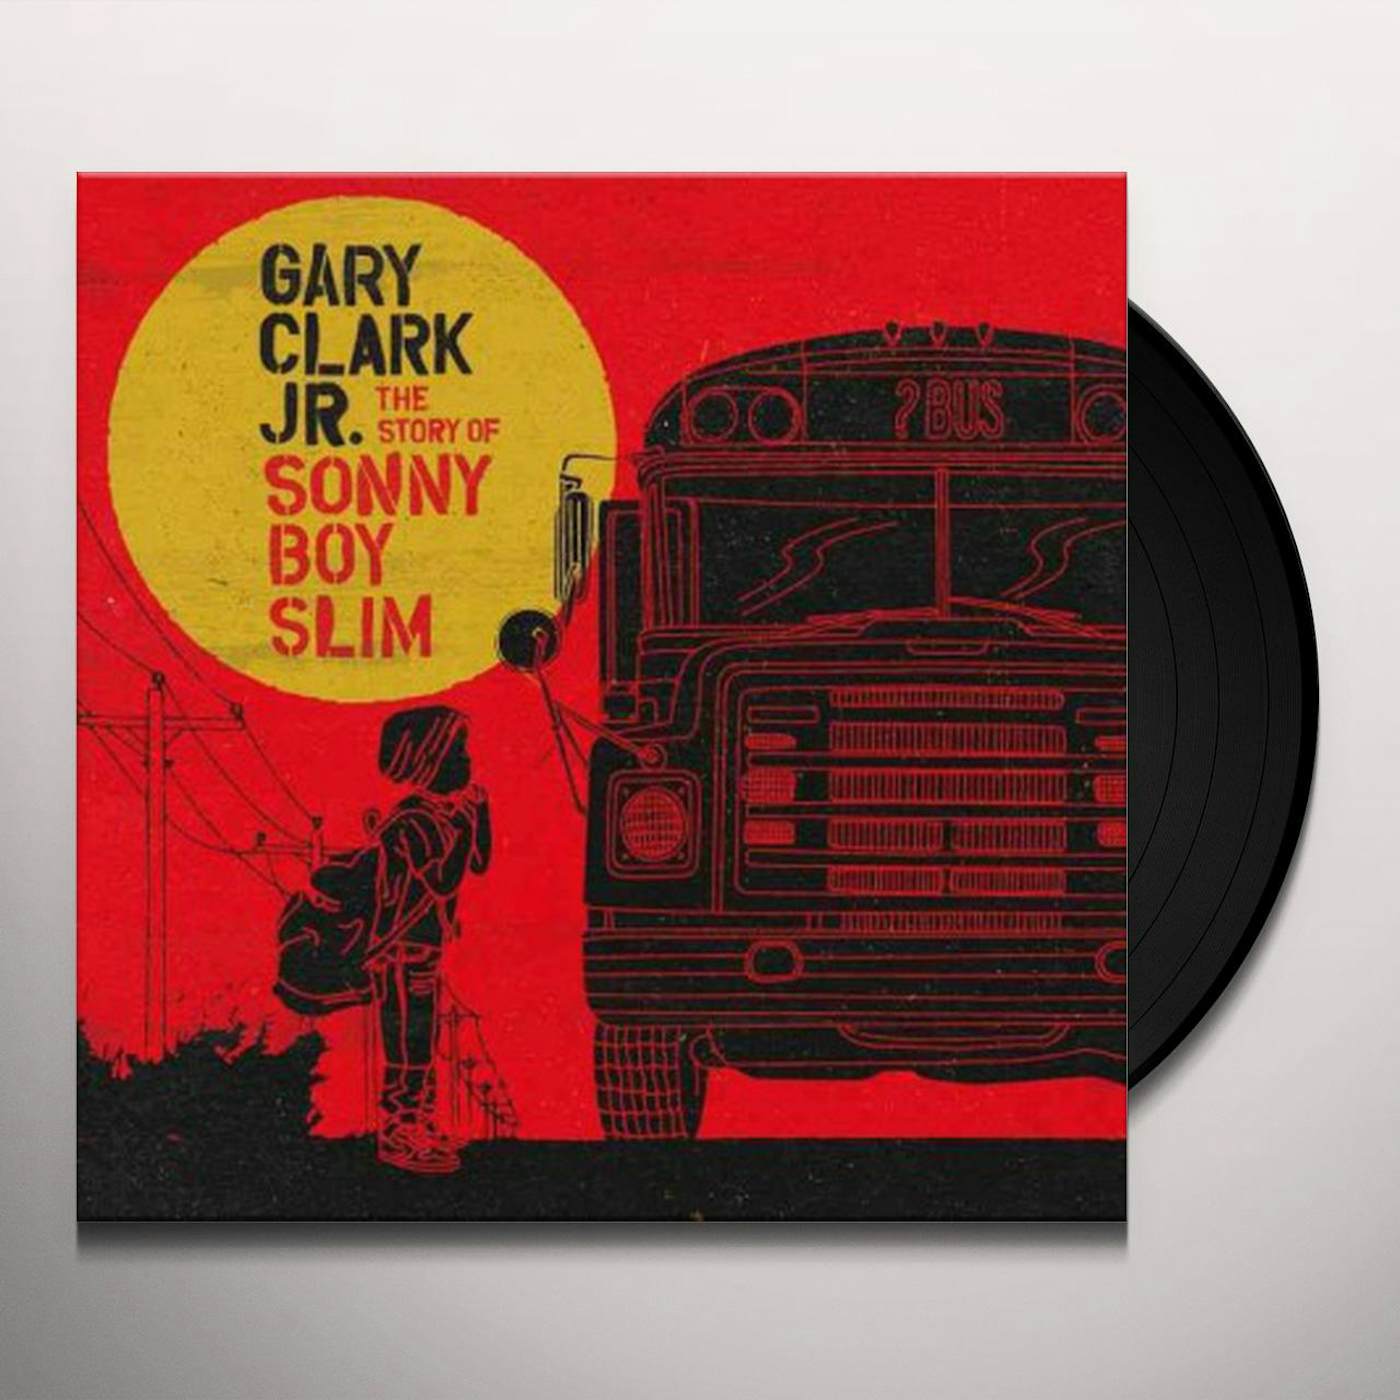 Gary Clark Jr. STORY OF SONNY BOY SLIM Vinyl Record